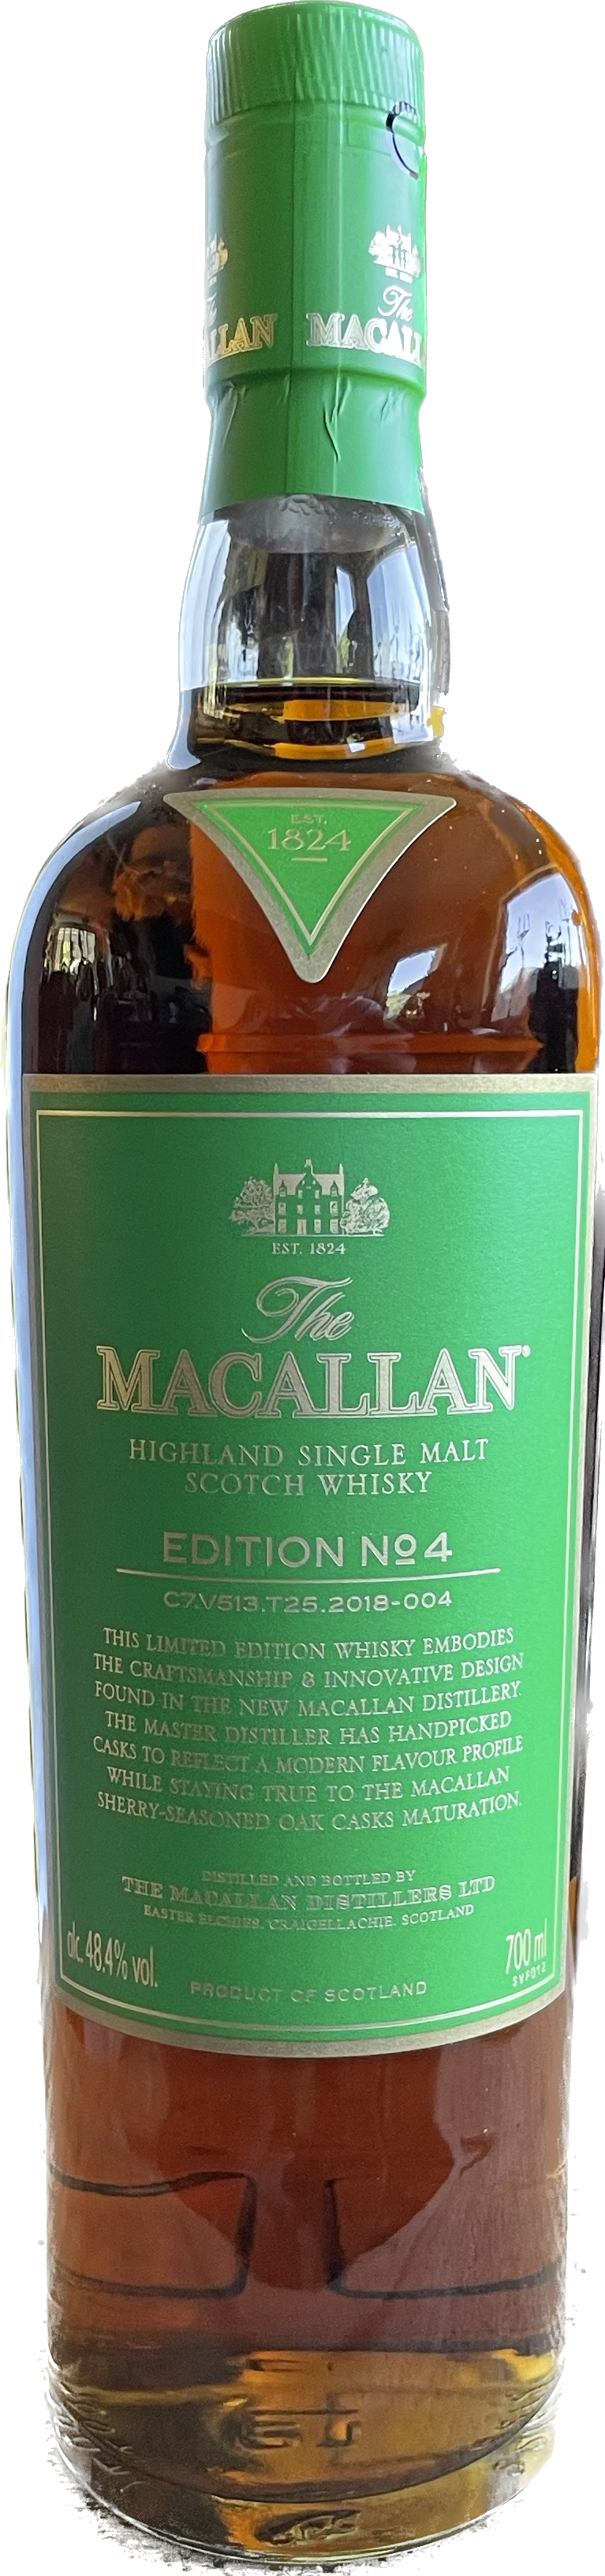 The Macallan Edition No. 4 Single Malt Whisky